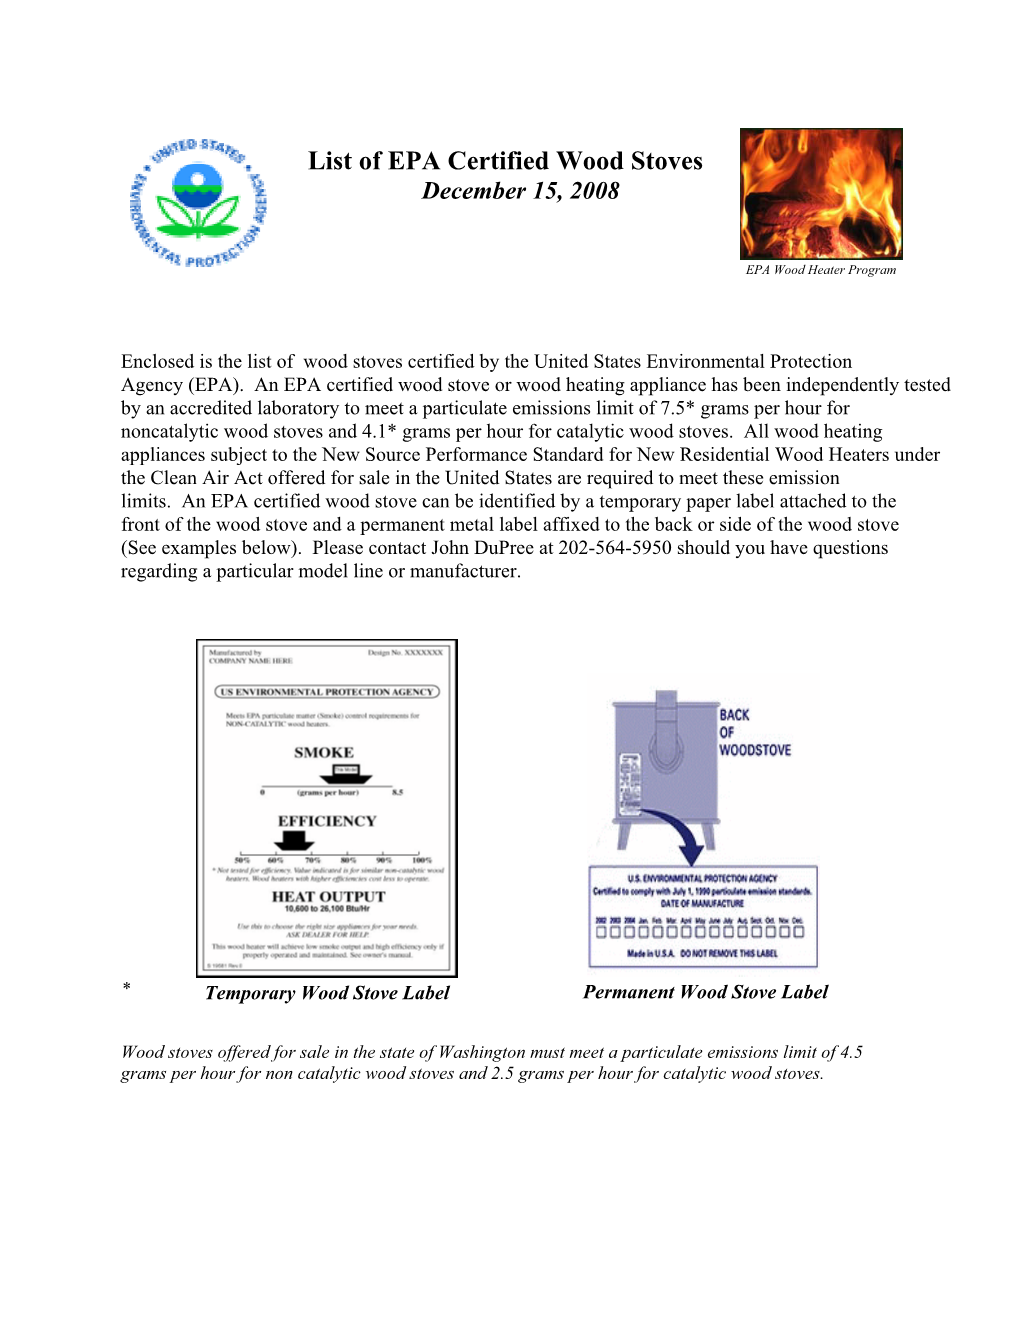 List of EPA Certified Wood Stoves December 15, 2008